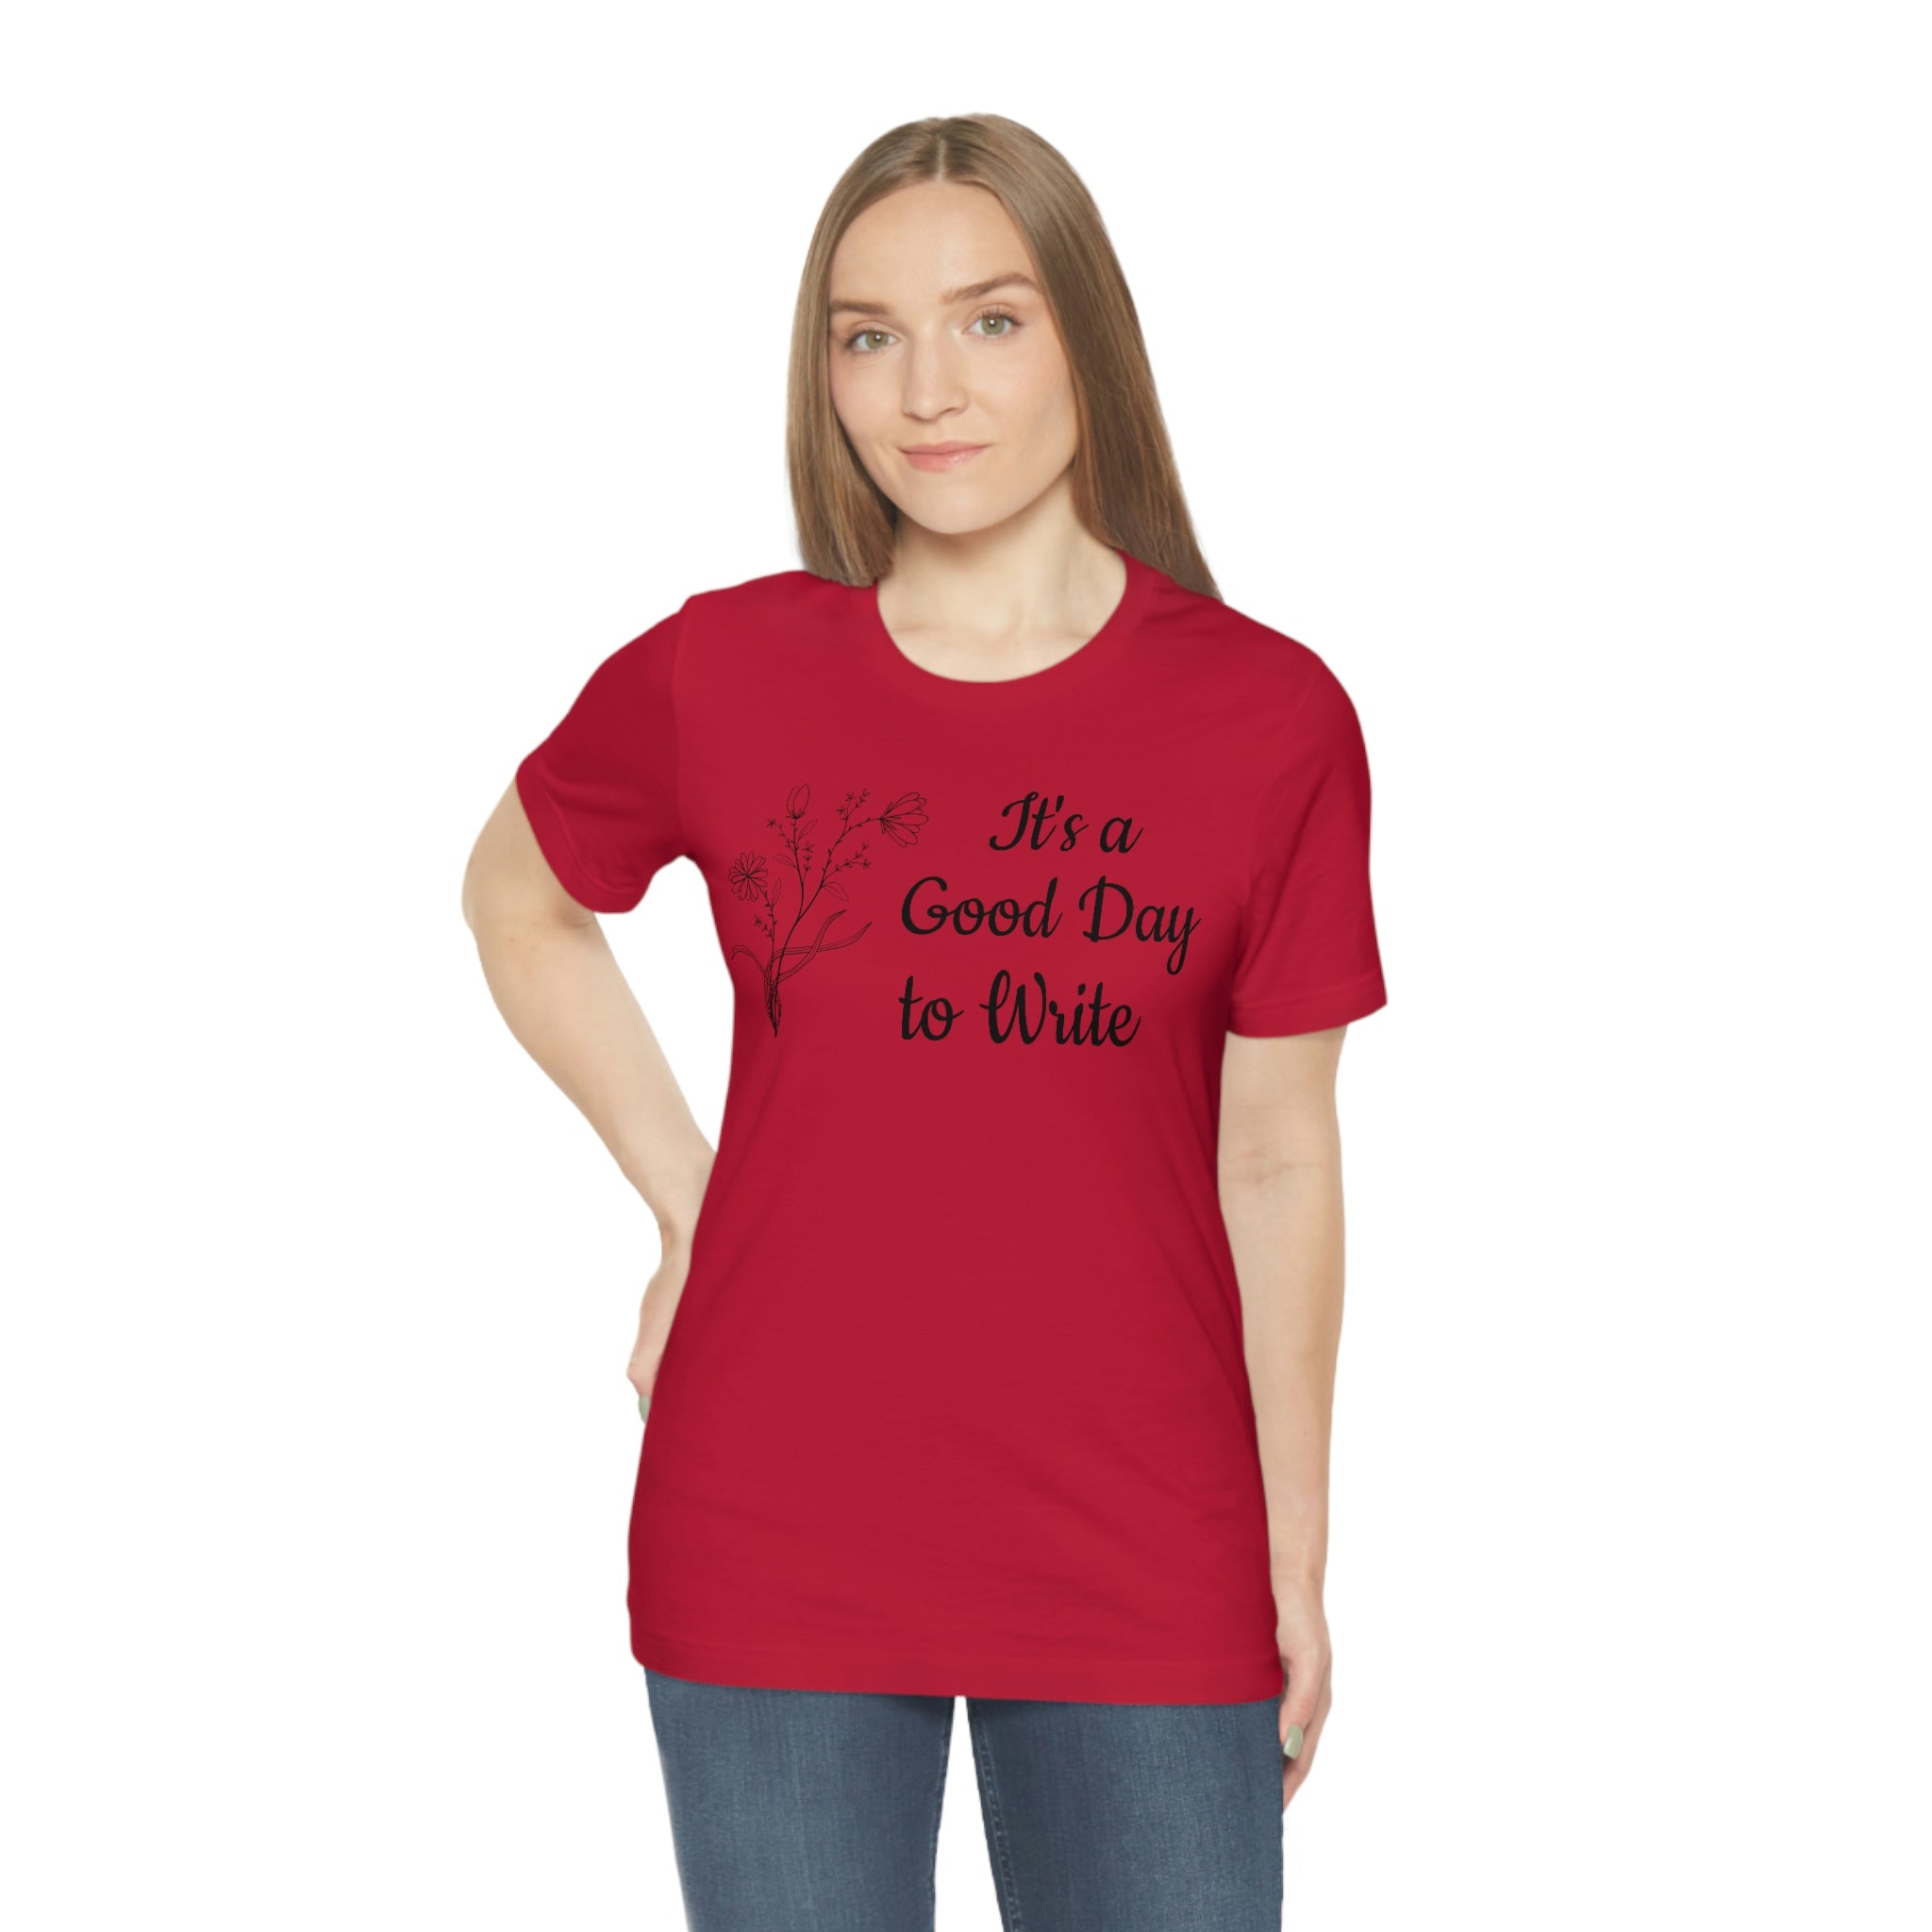 GOOD DAY TO WRITE - Women's Short Sleeve T-Shirt